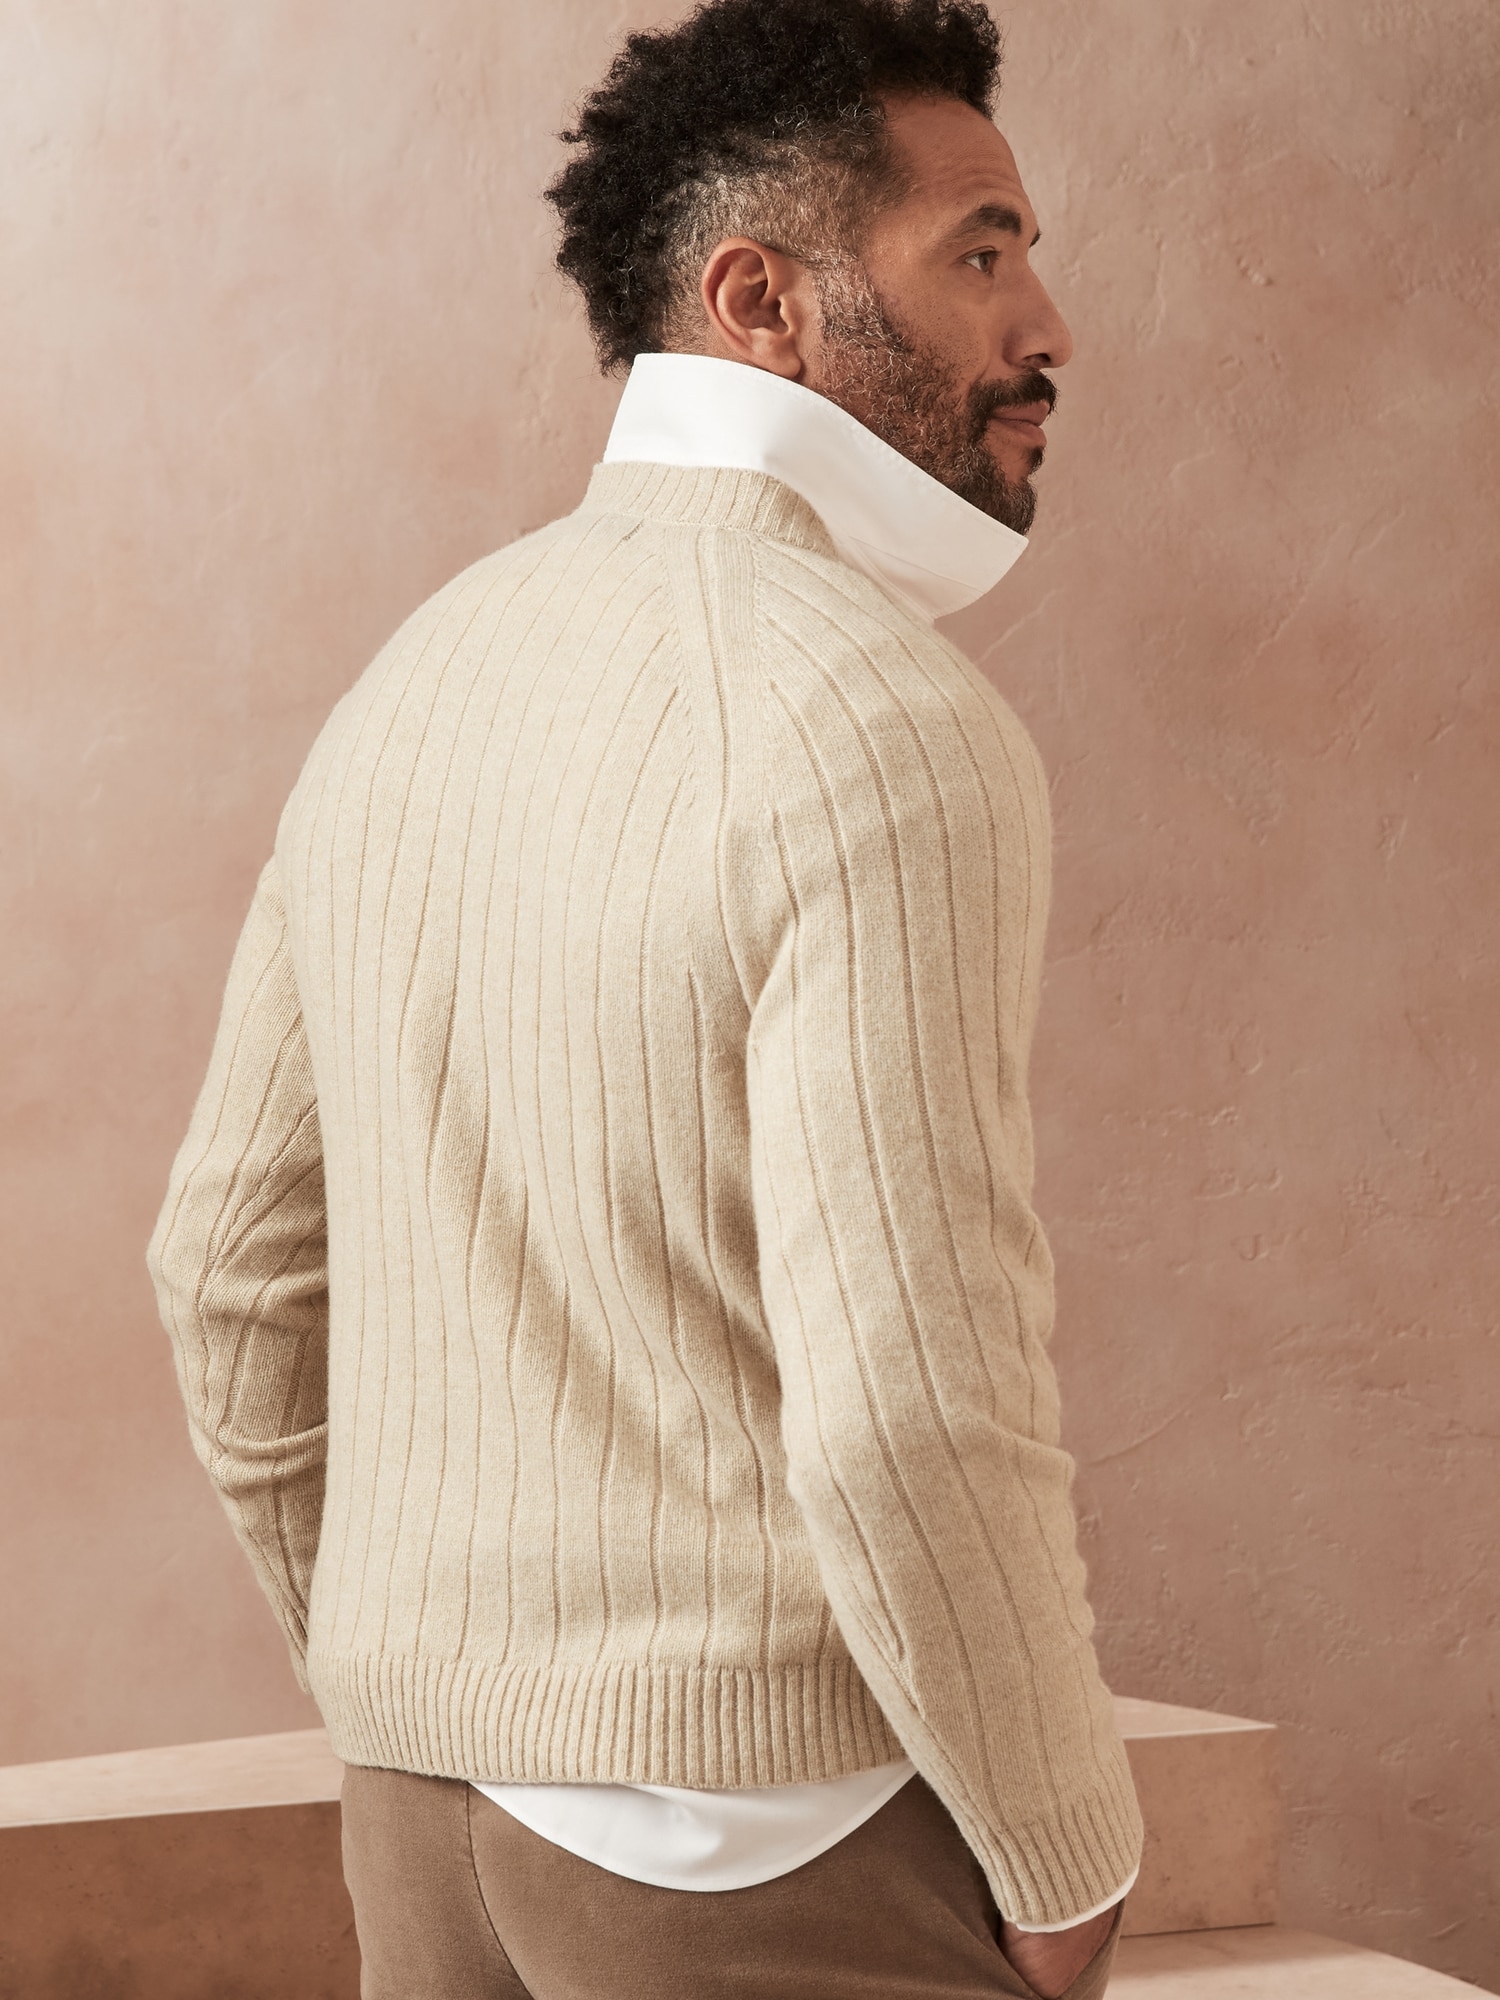 Italian Wool-Blend Crew-Neck Sweater